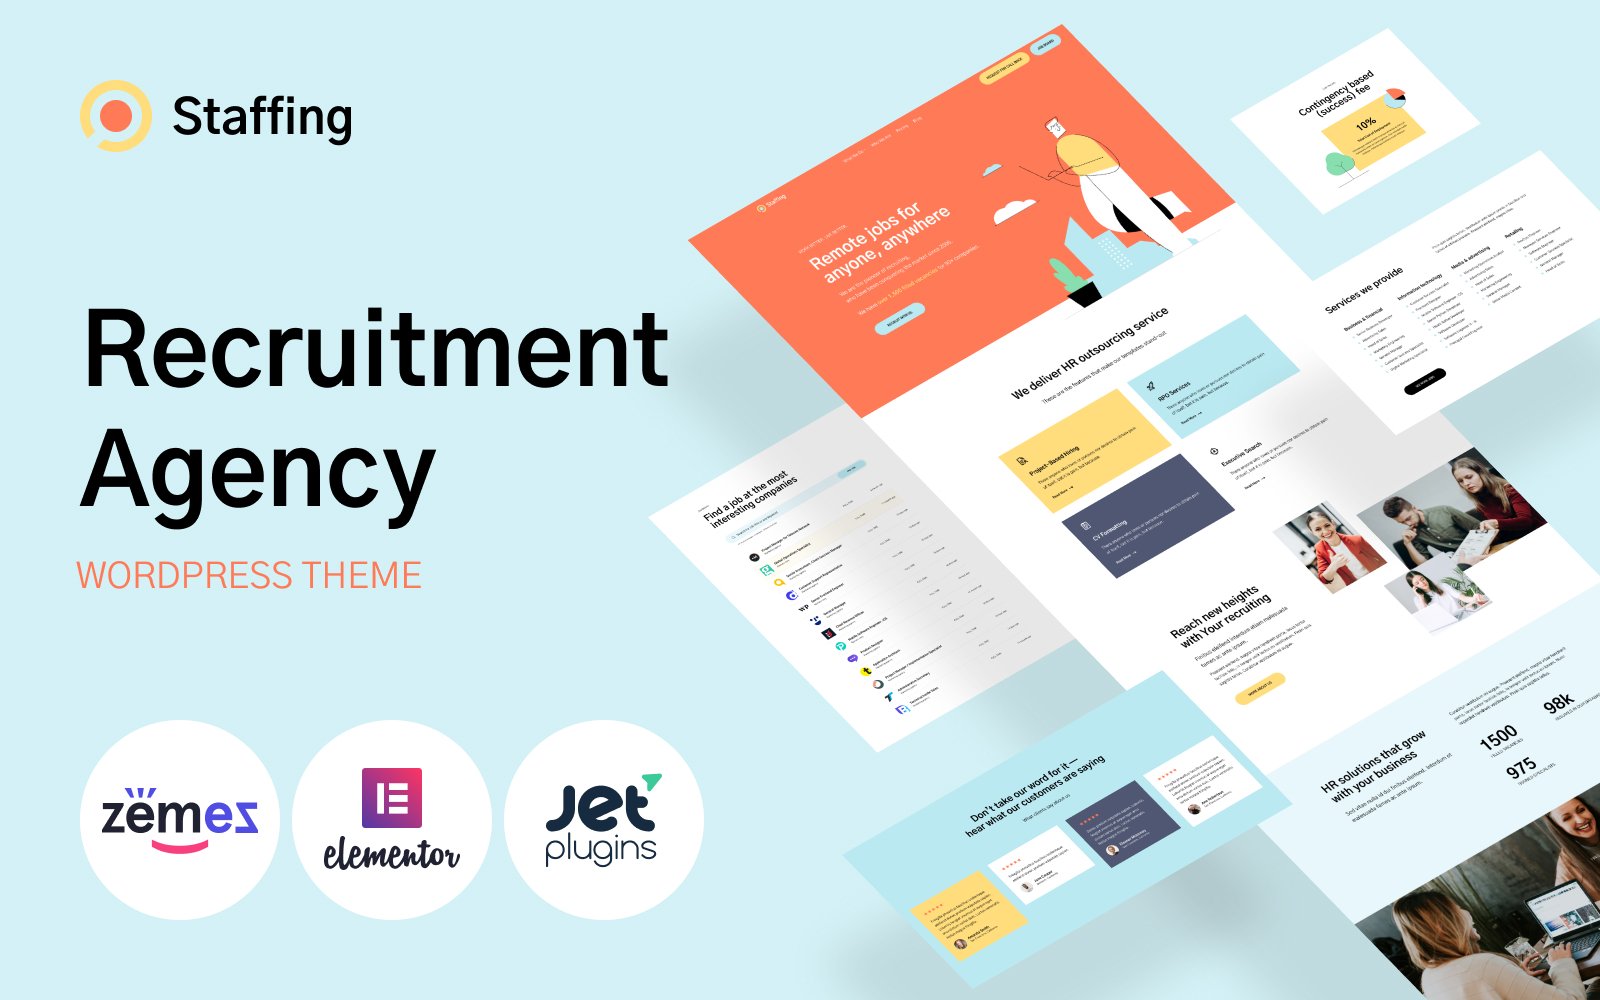 staffing-recruitment-agency-website-template-wordpress-theme-zemez